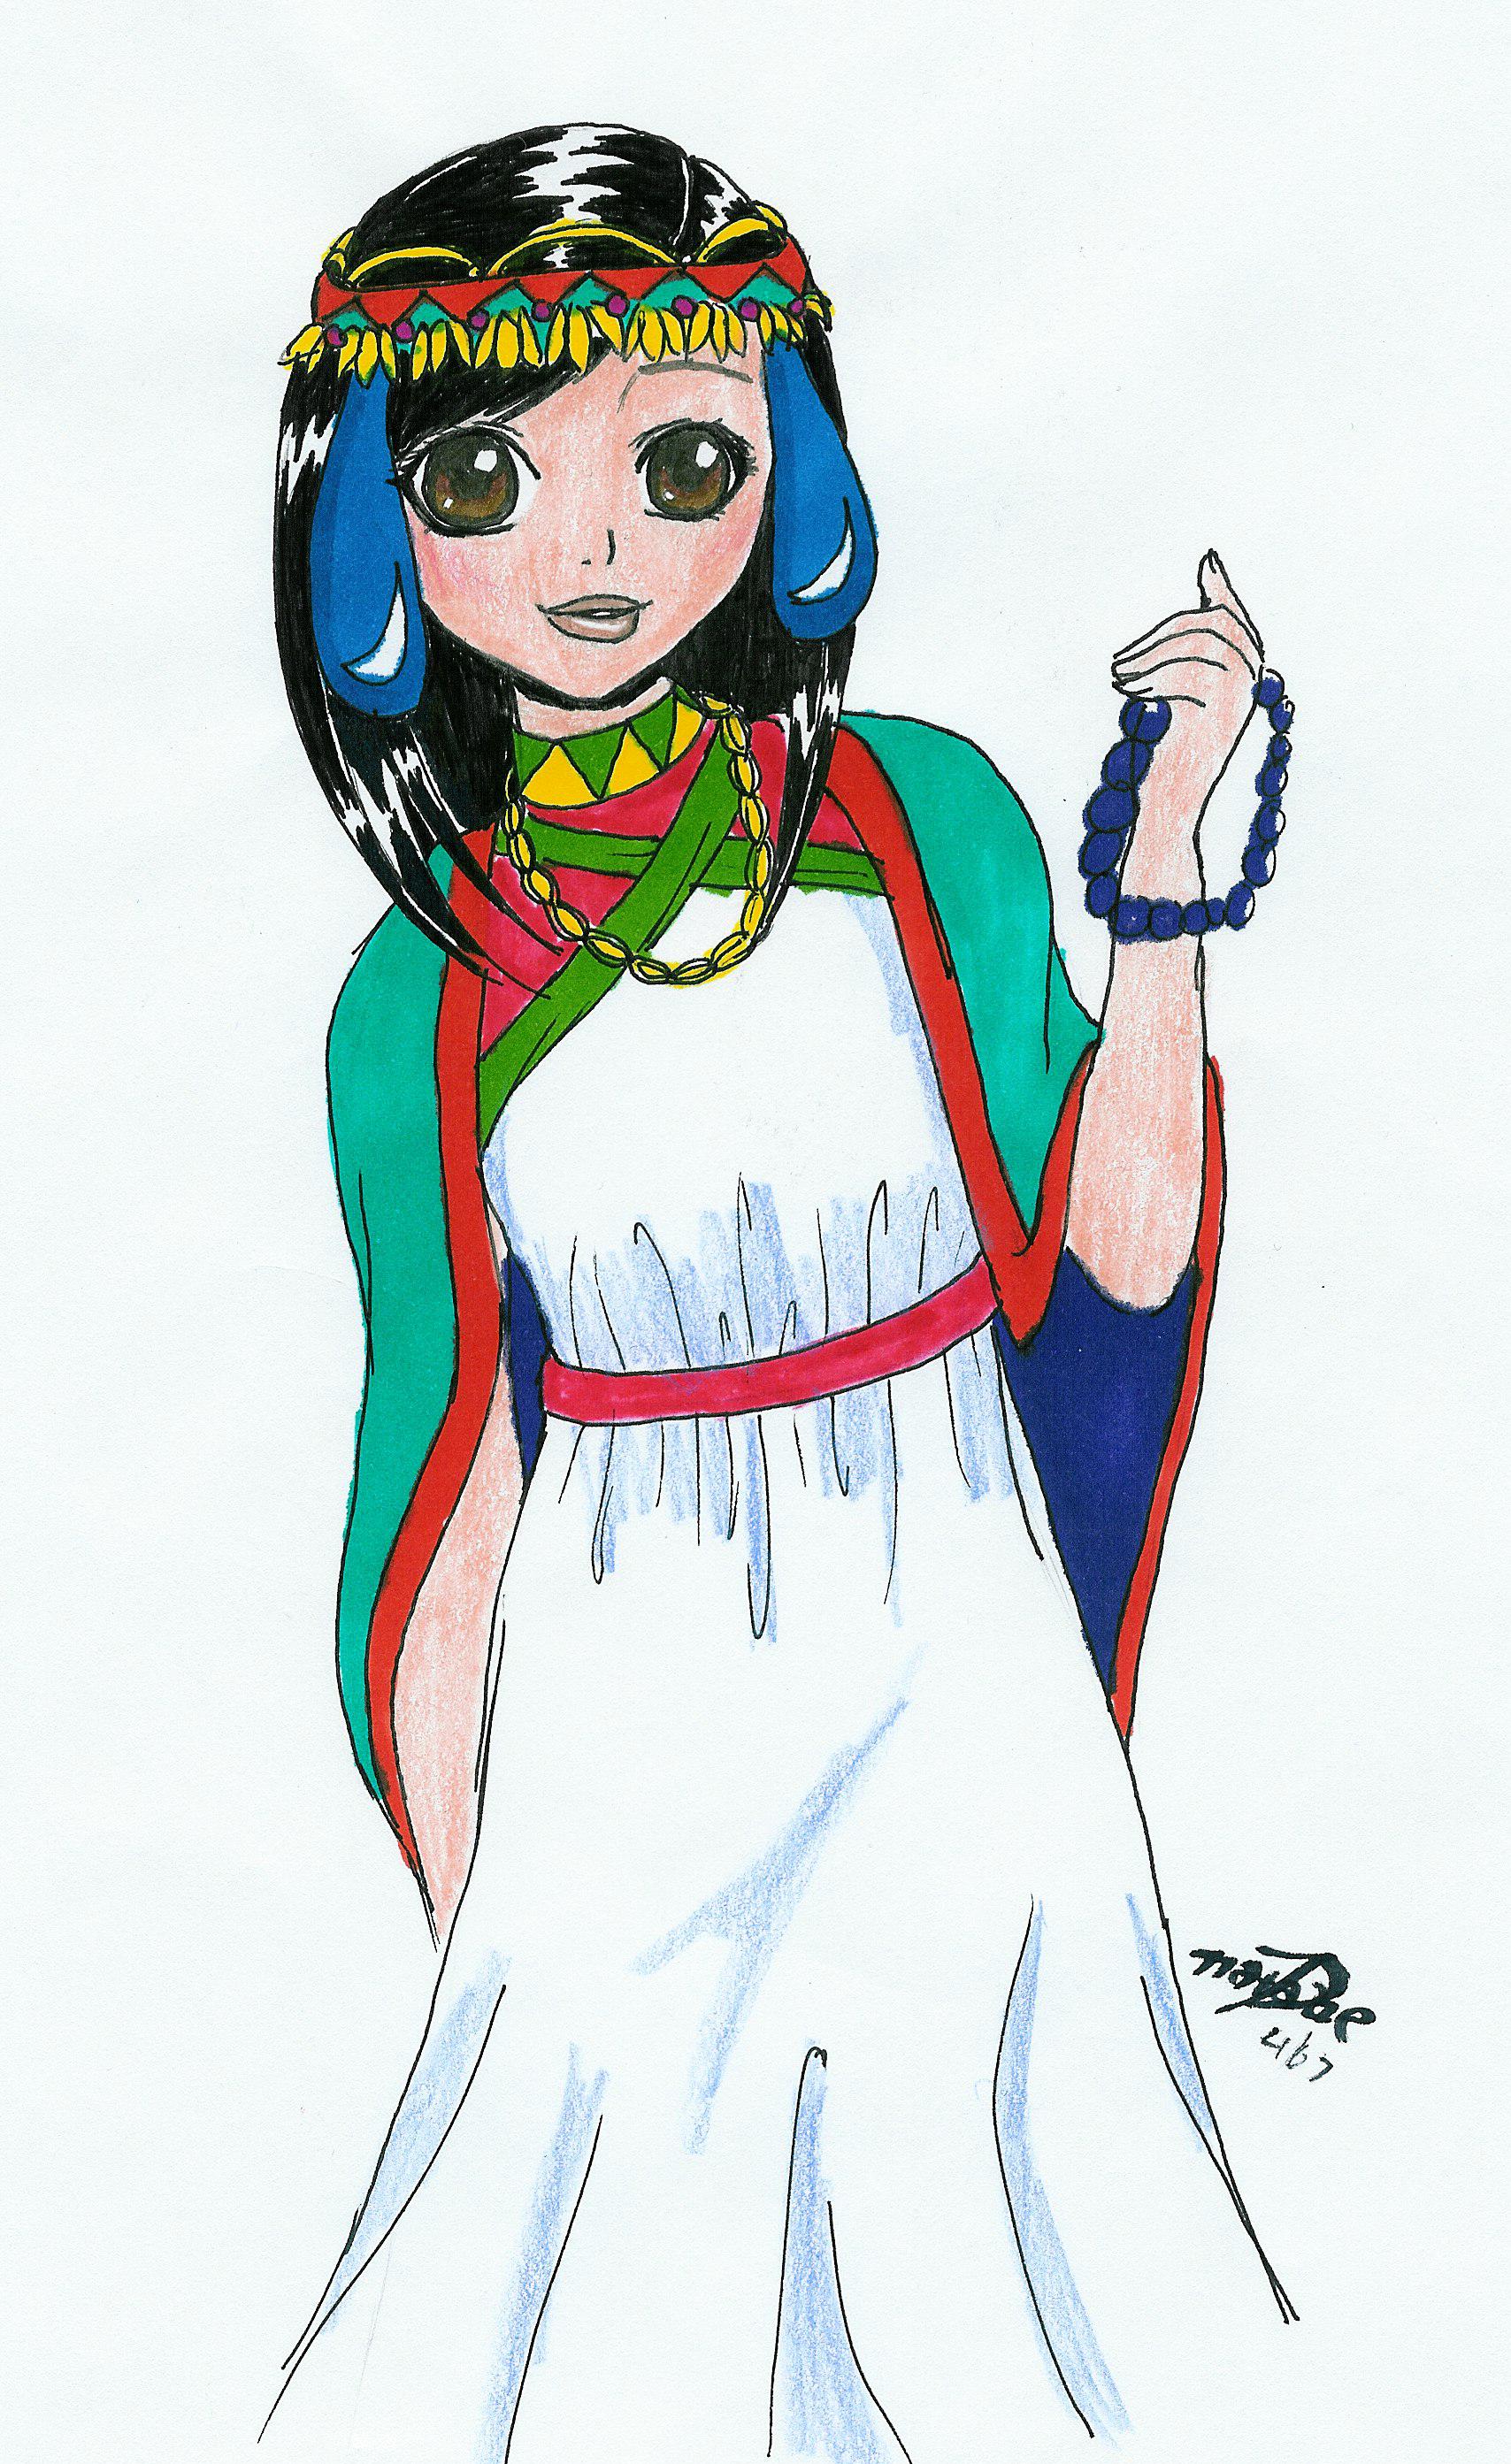 Mesopotamian/Sumerian girl by Fumie716